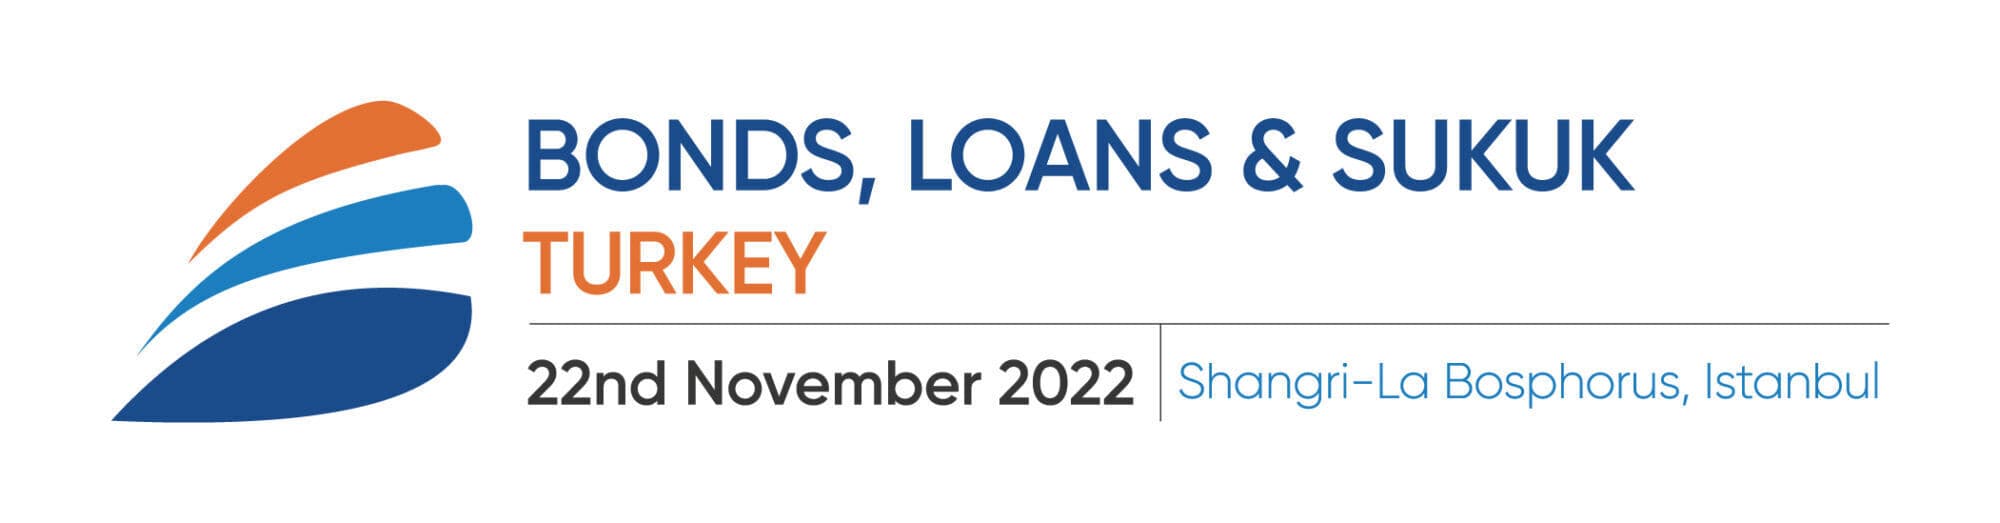 Bonds, Loans & Sukuk Turkey 2022